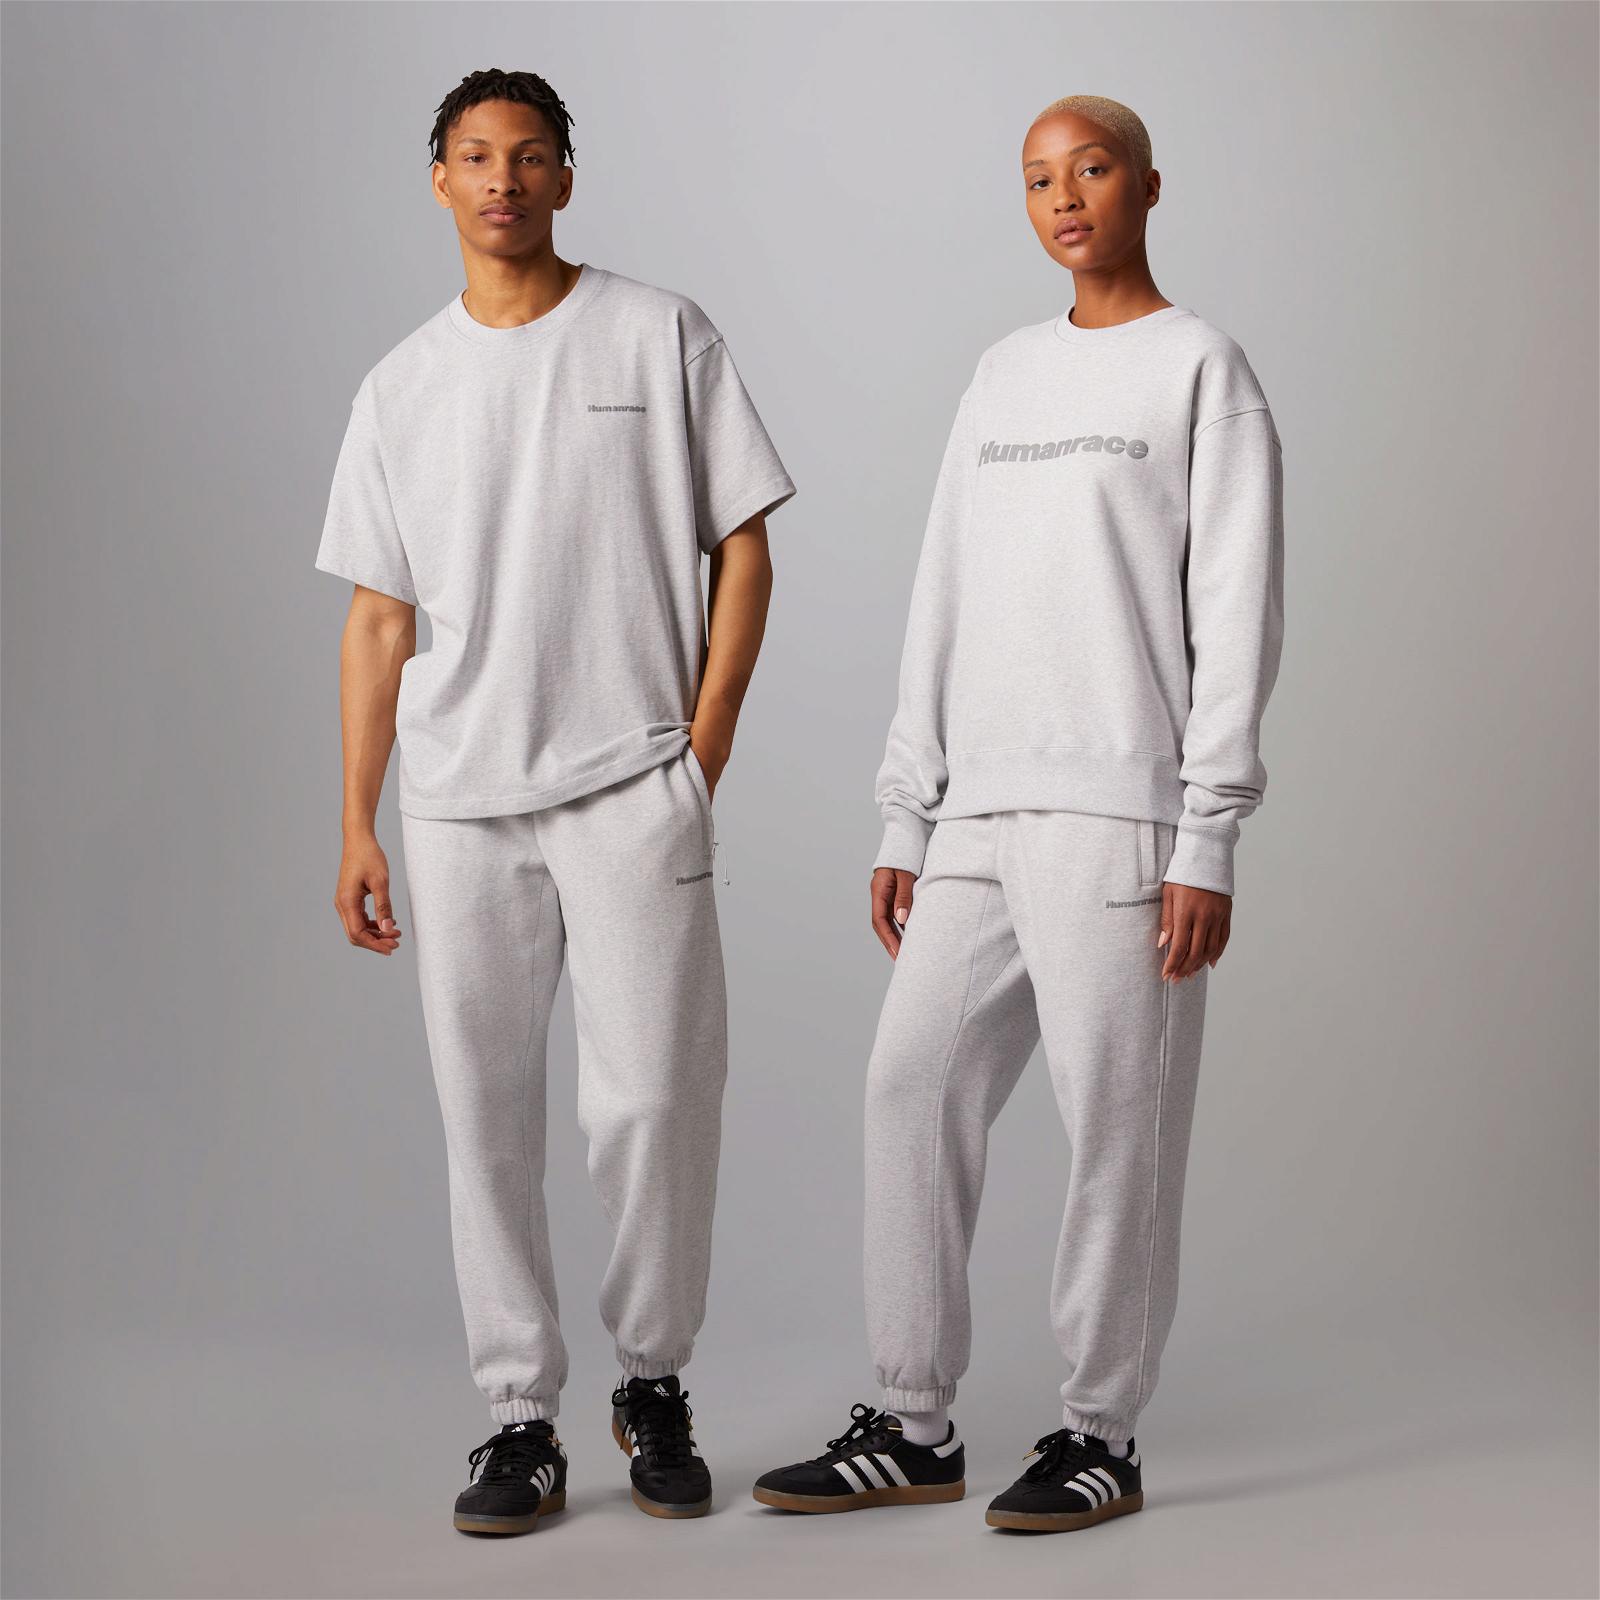 Adidas x Pharrell Williams Return With Humanrace Premium Basics for Spring